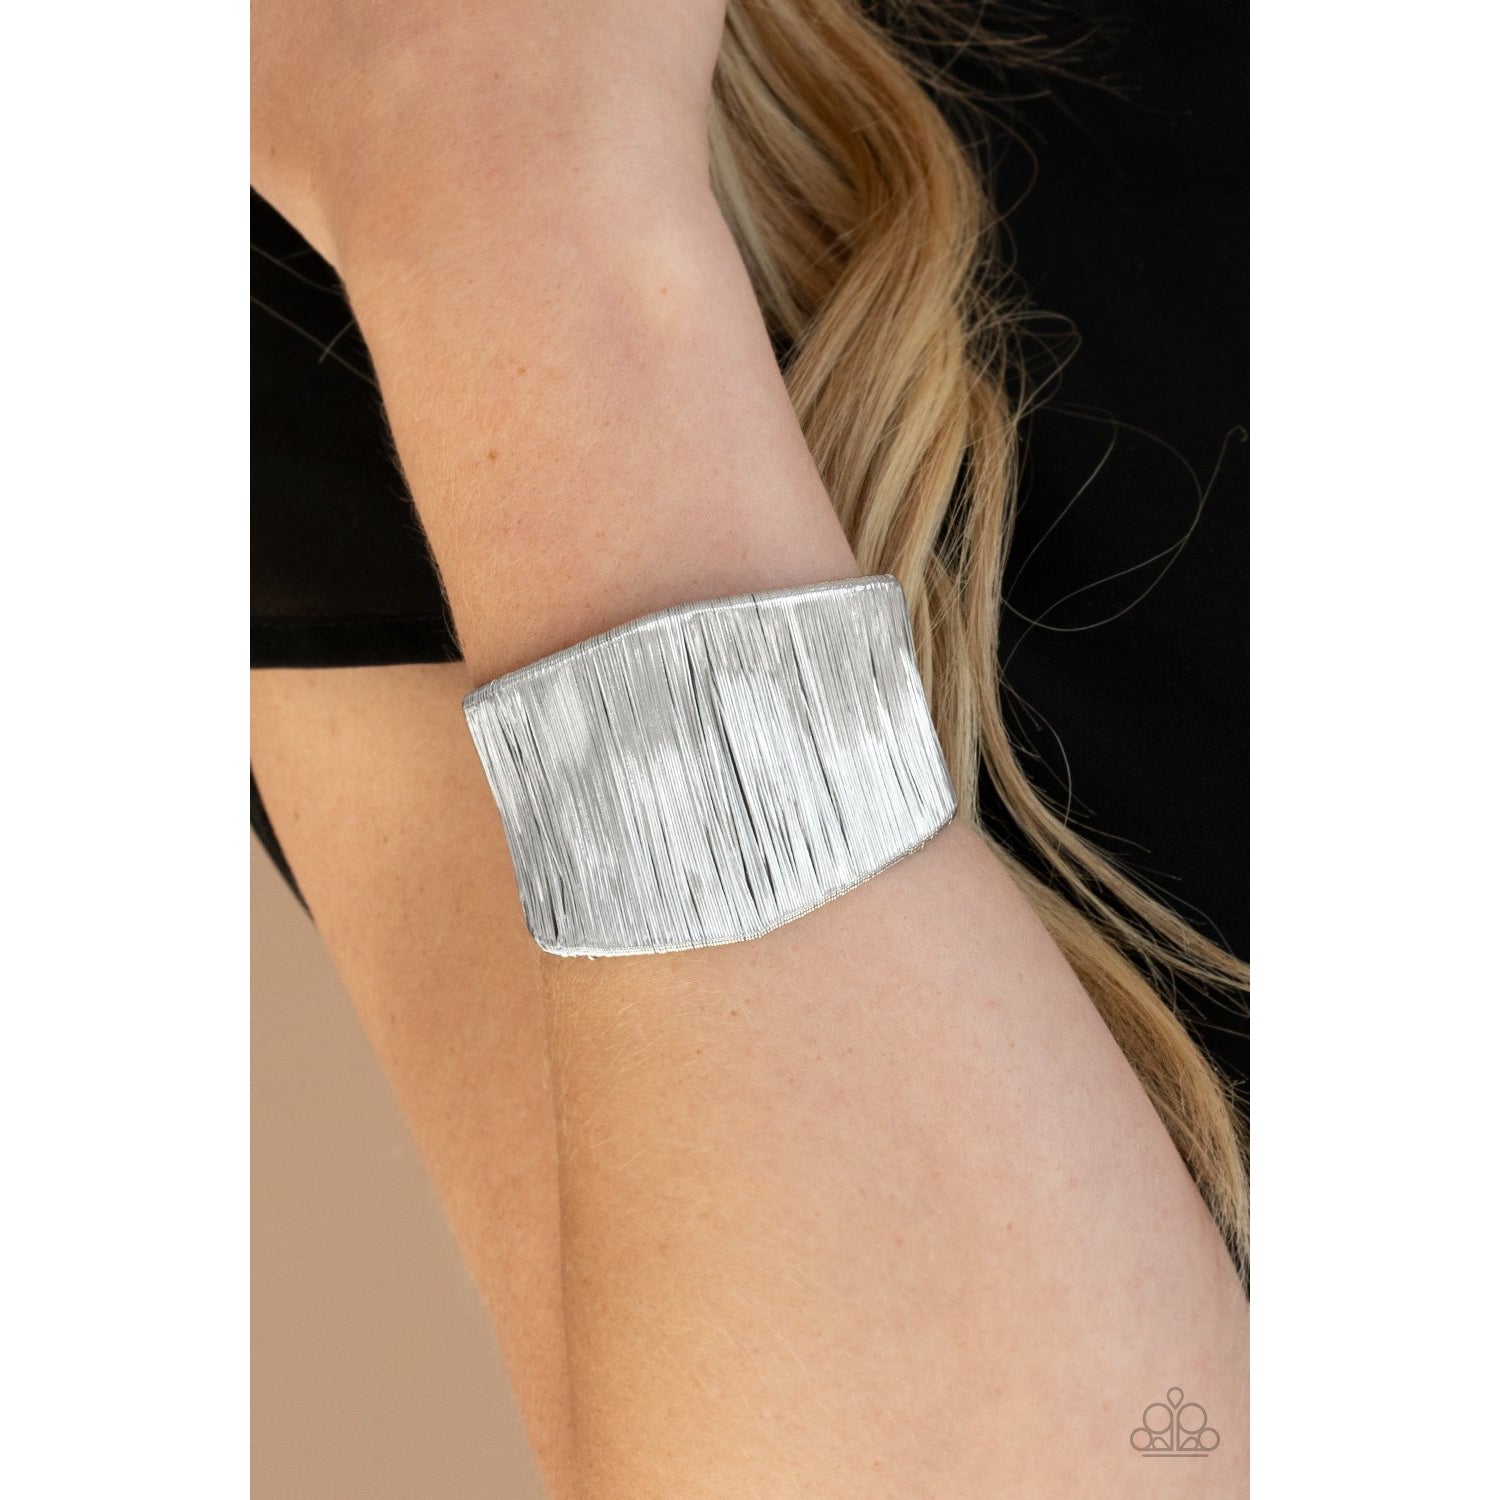 Hot Wired Wonder - Silver Cuff Bracelet - Paparazzi Accessories - GlaMarous Titi Jewels